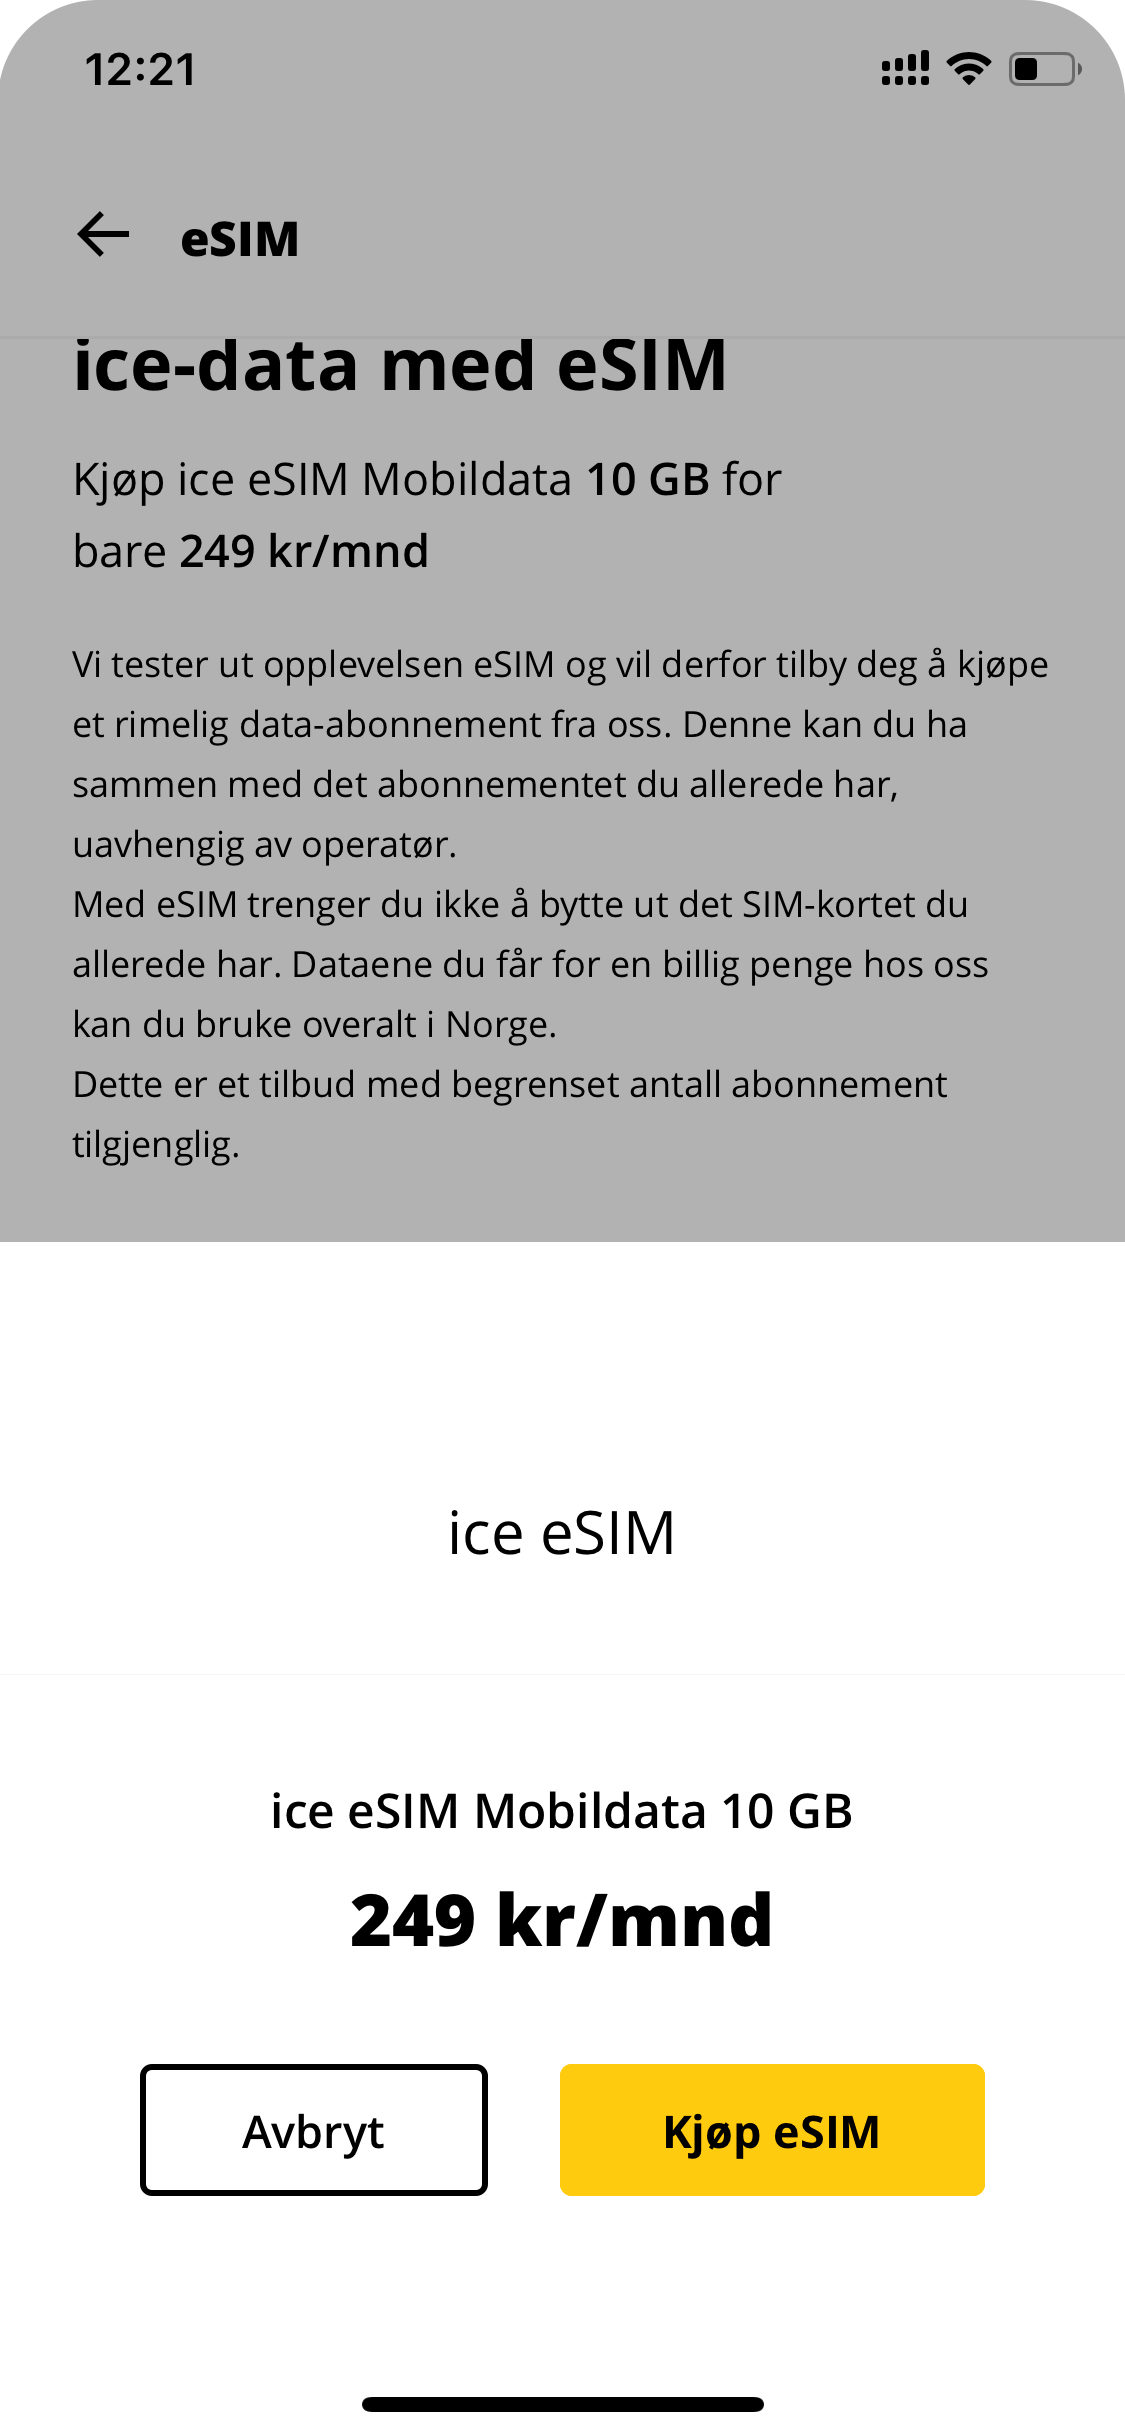 Via appen kan du registrere eSIM hos Ice.